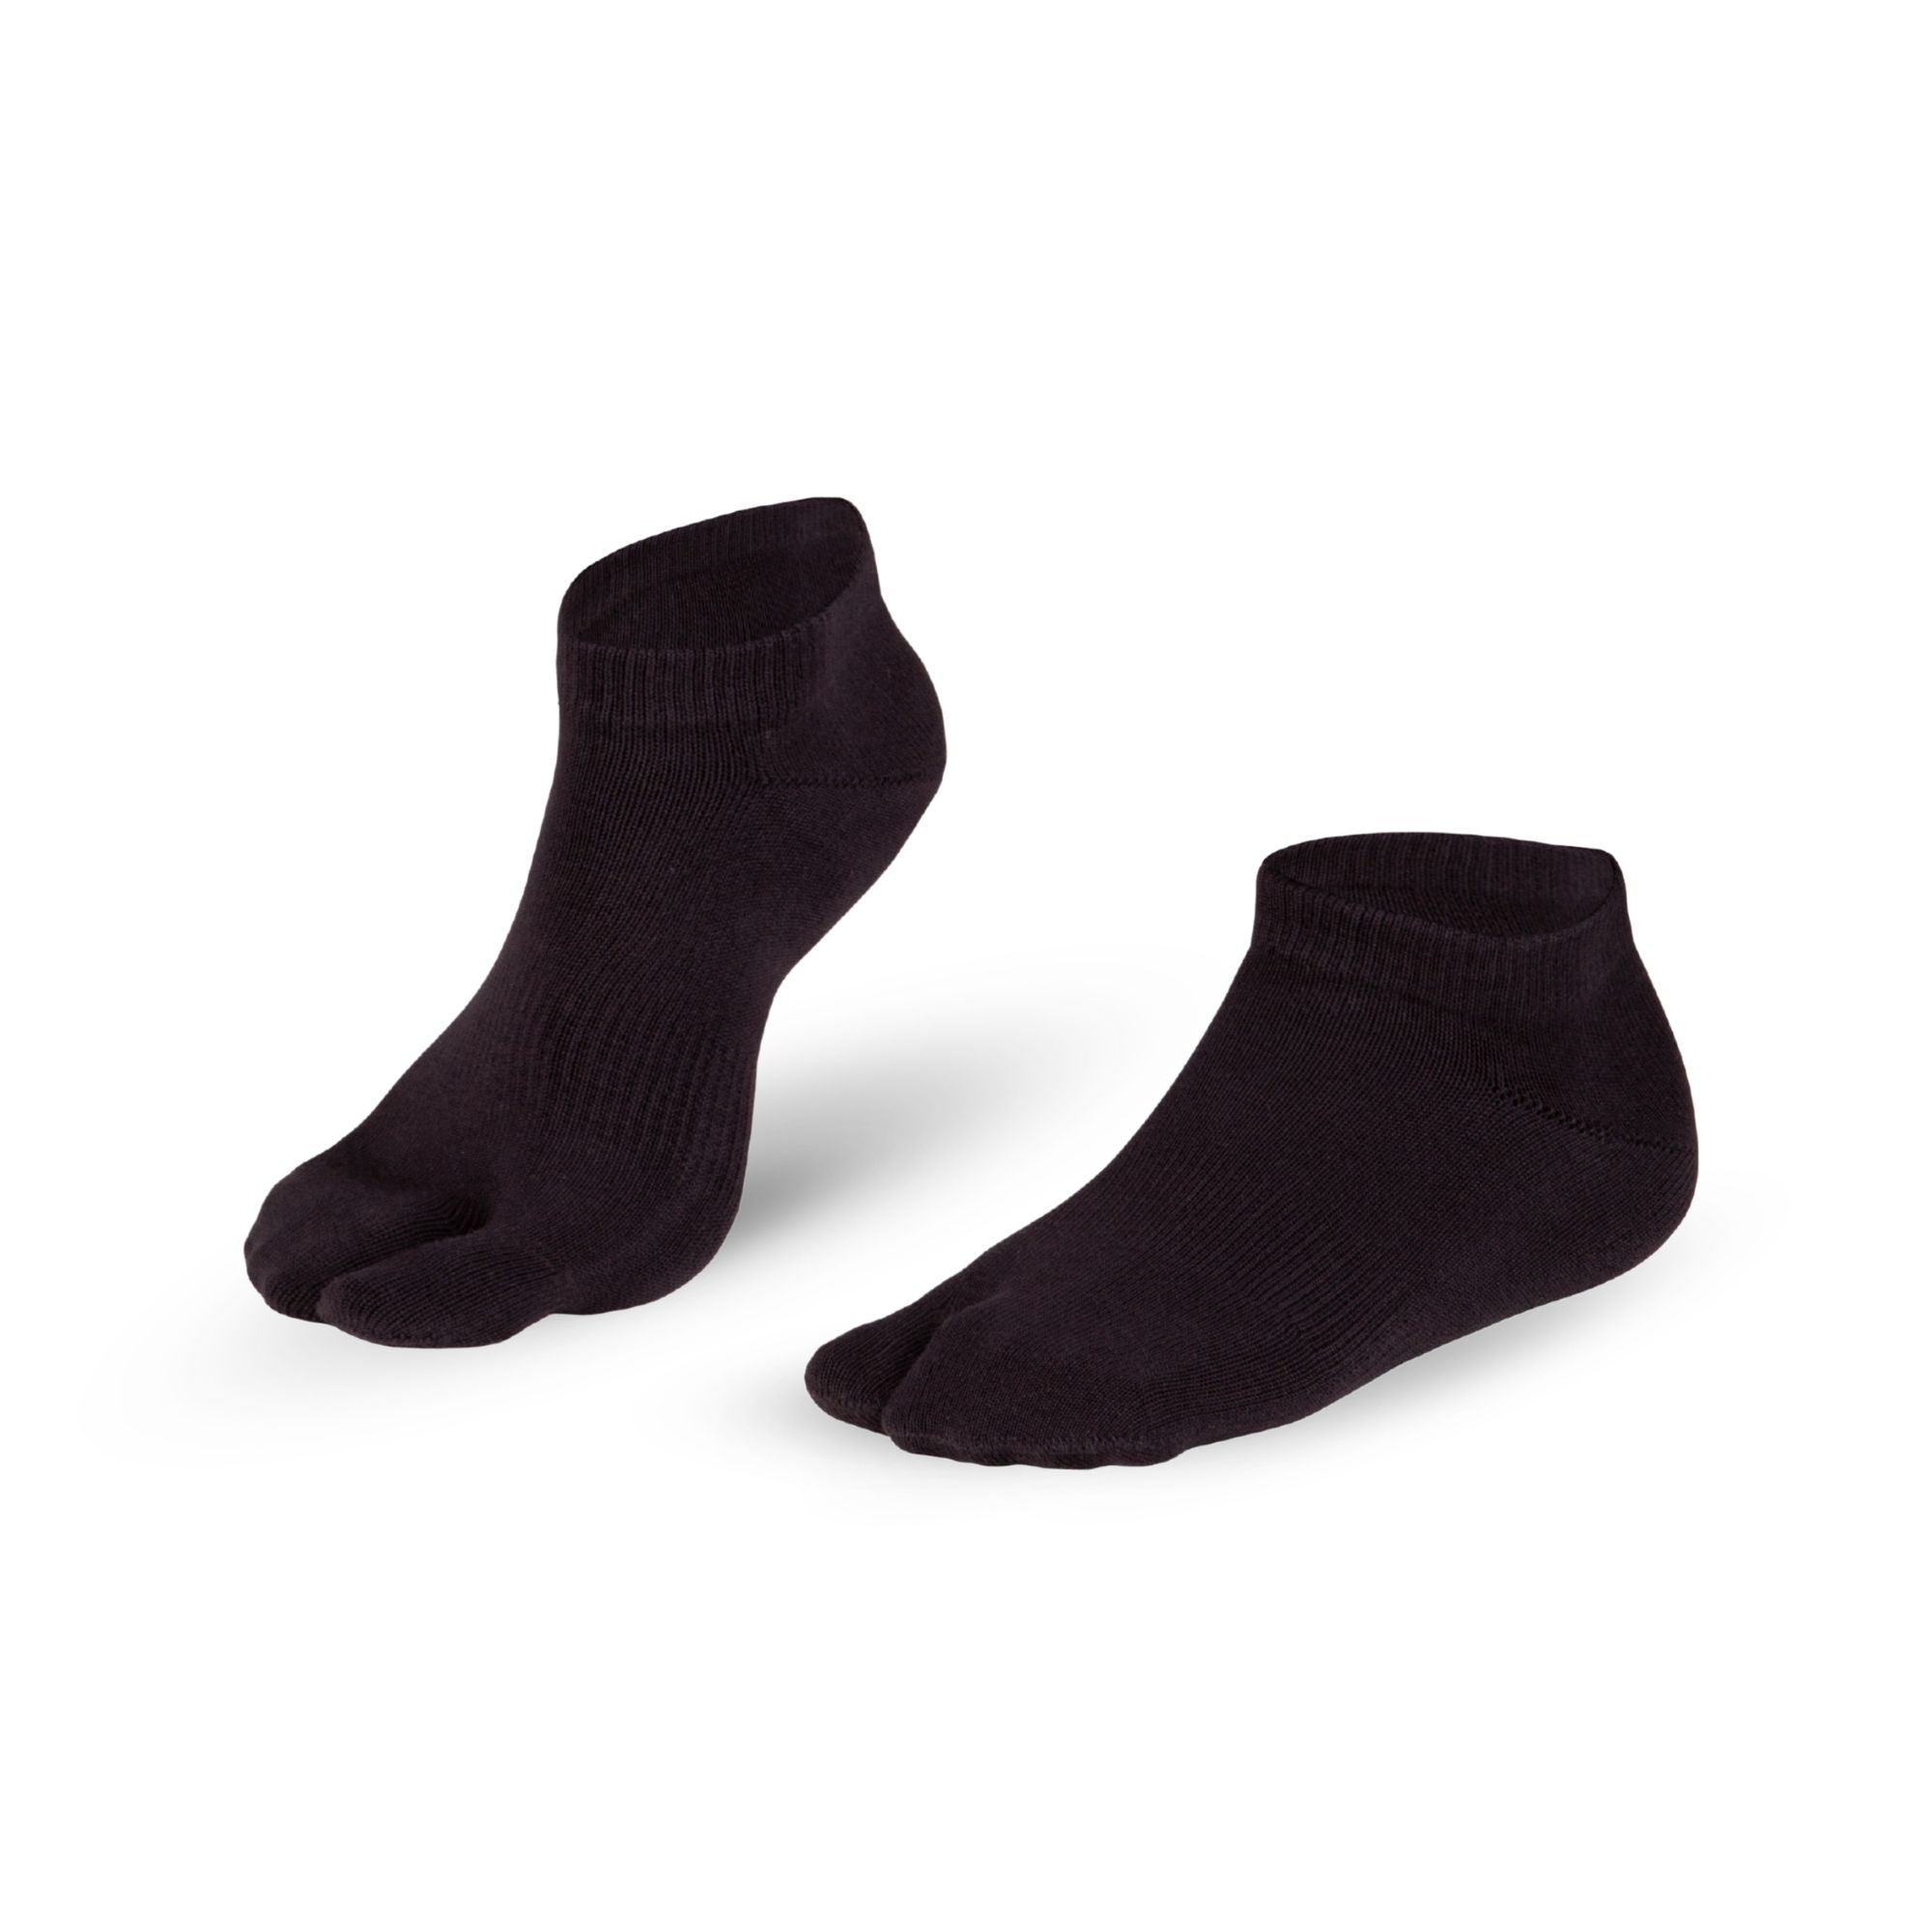 Knitido Tabi Socks Sneaker, Short Cotton Tabi Socks with Single Big Toe Dark Grey